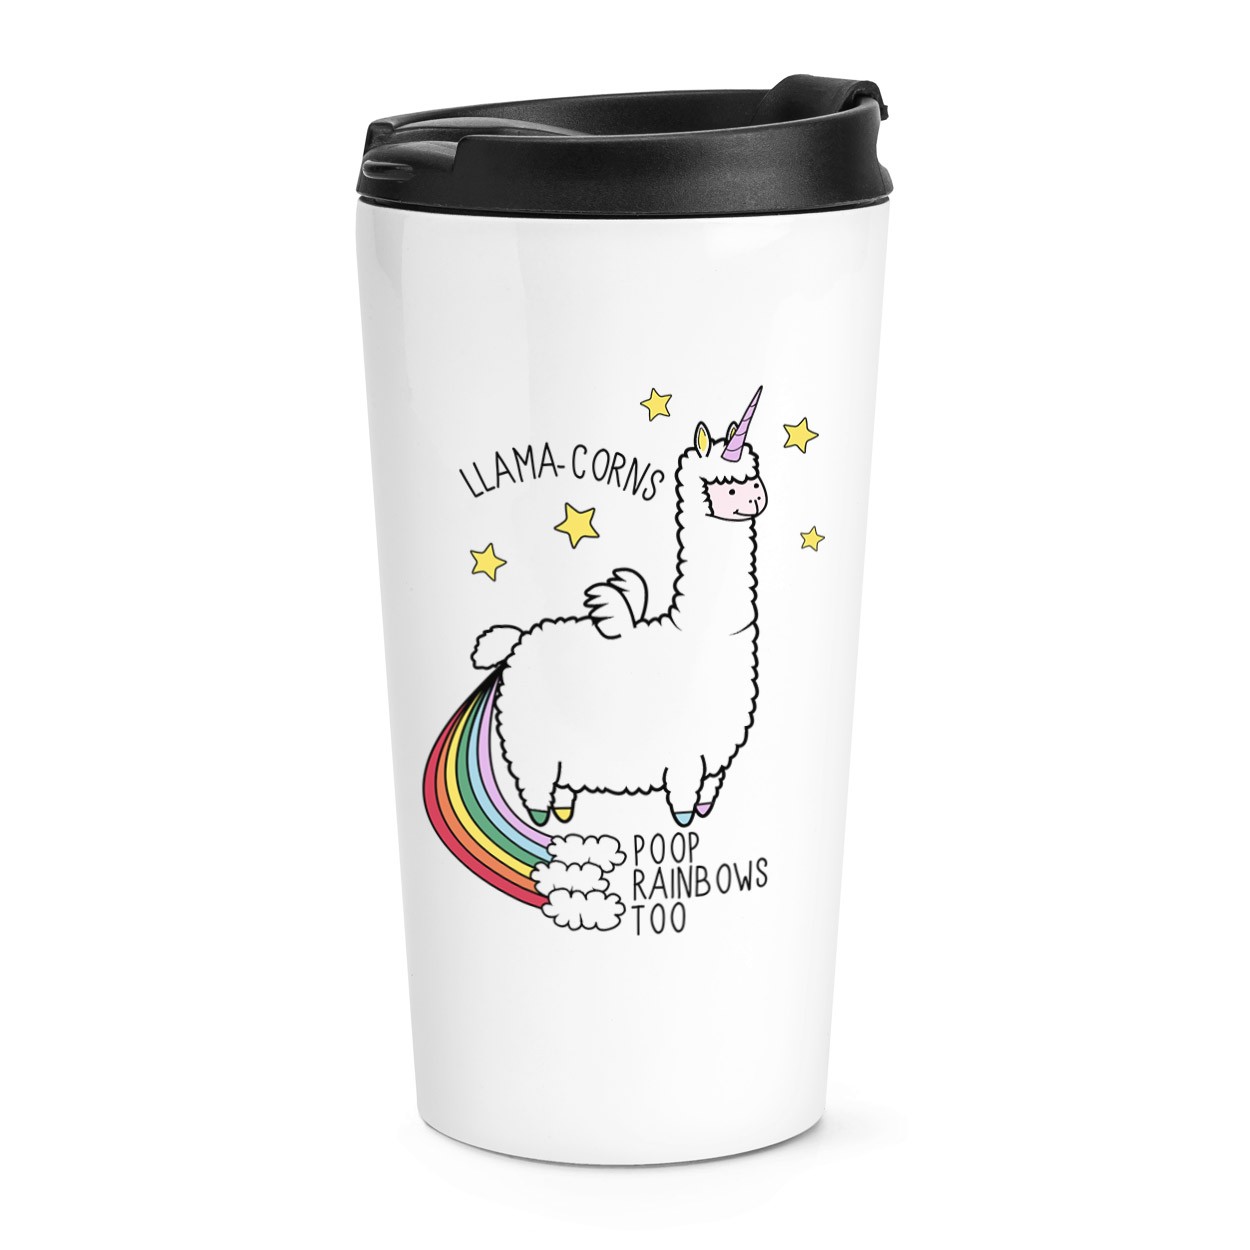 Llama-corns Poop Rainbows Too Travel Mug Cup